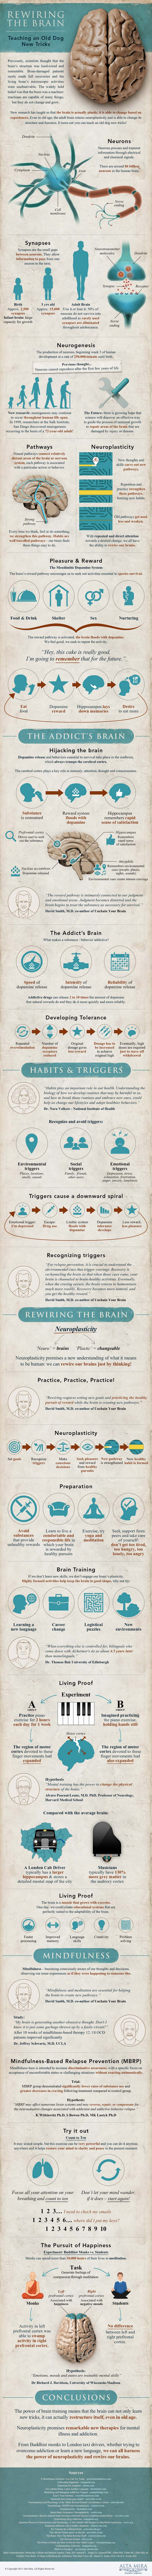 Rewiring_the_Brain_Infographic.jpg